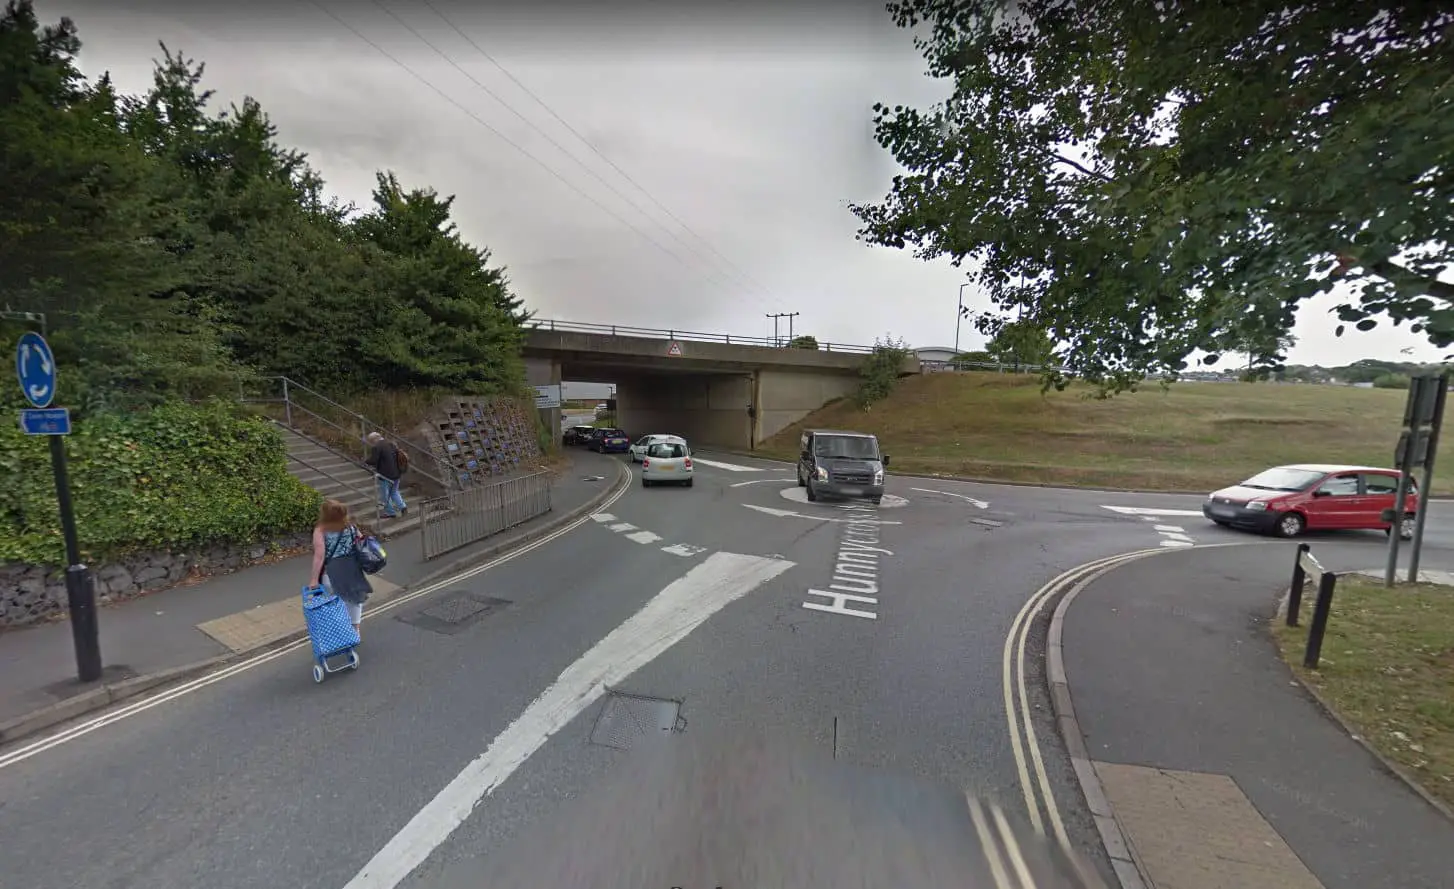 hunnycross way roundabout on Google Streetview